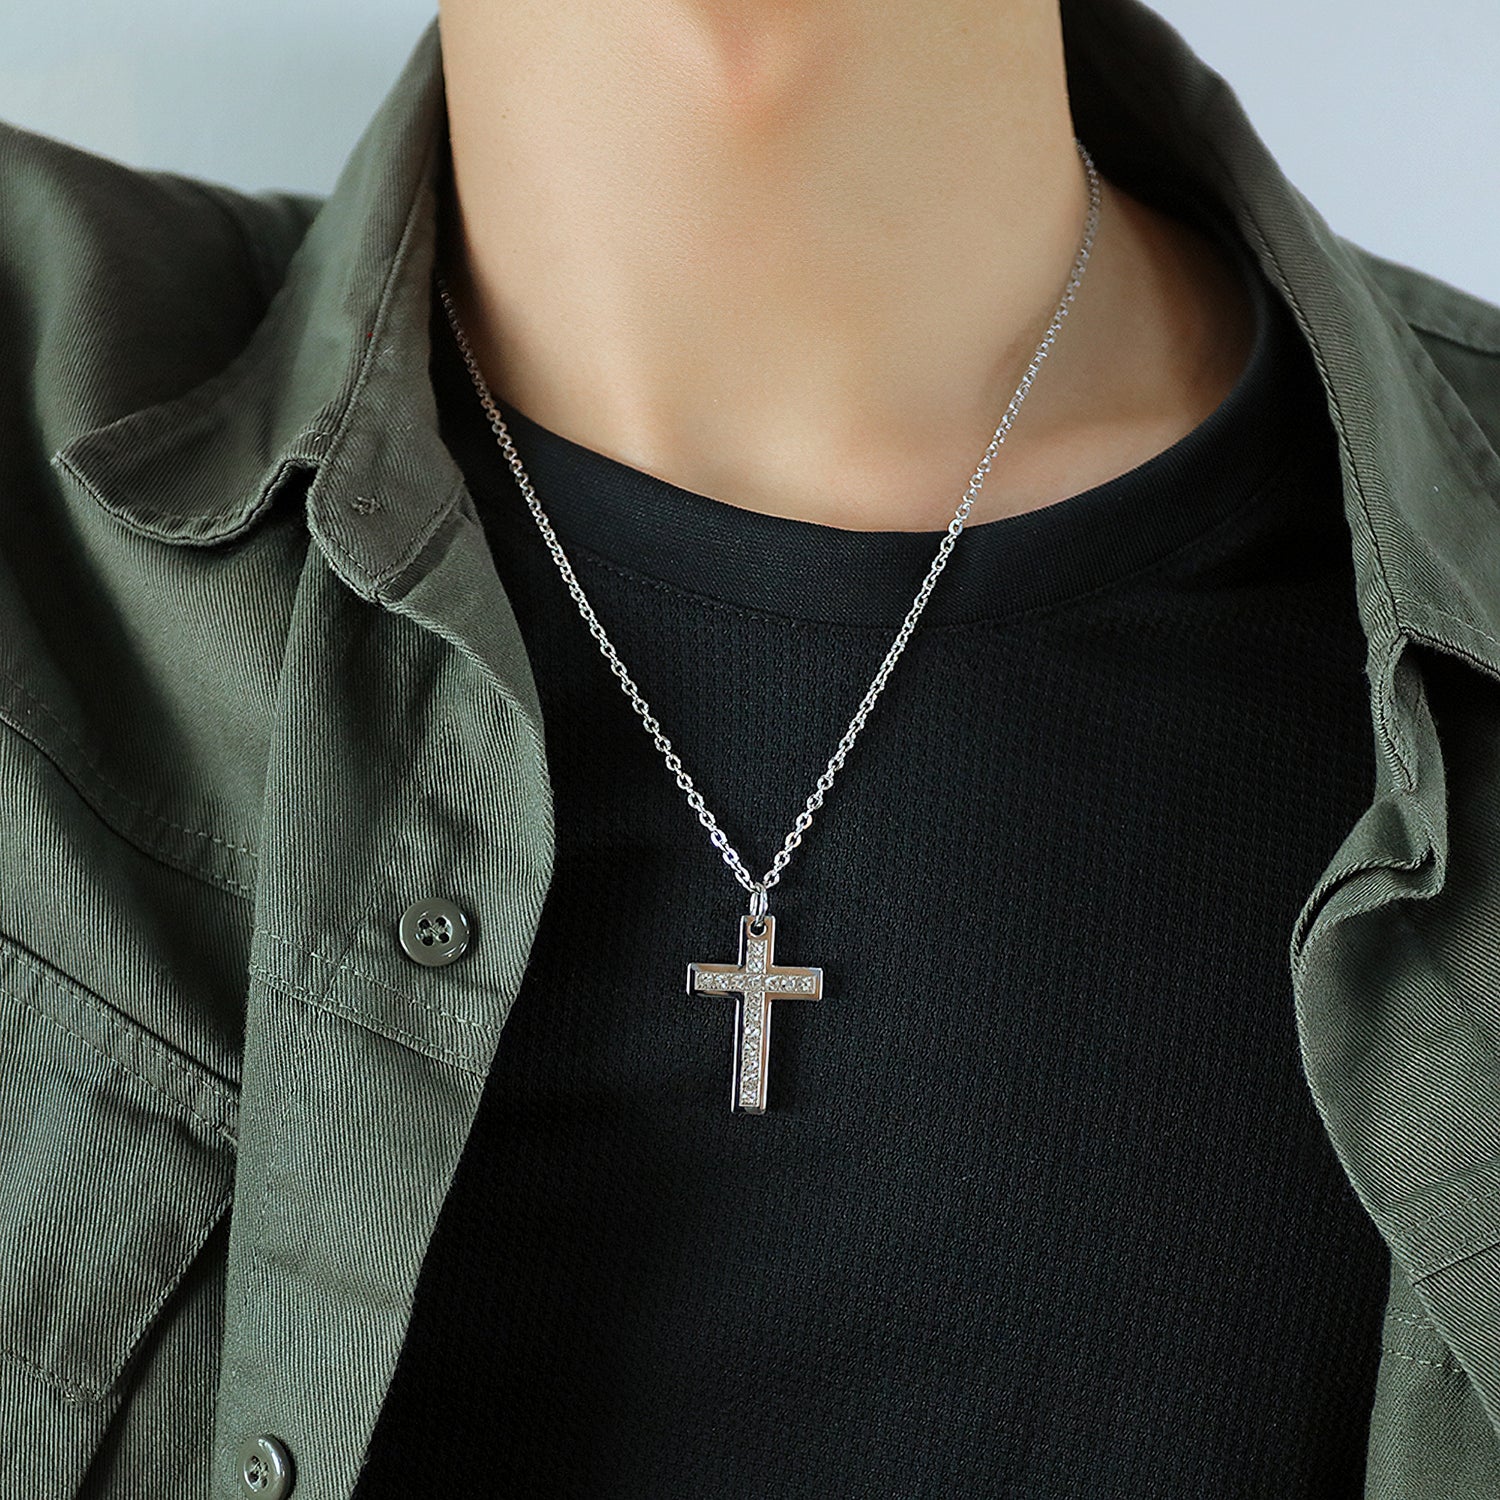 Men's Bling Cross Pendant Necklace